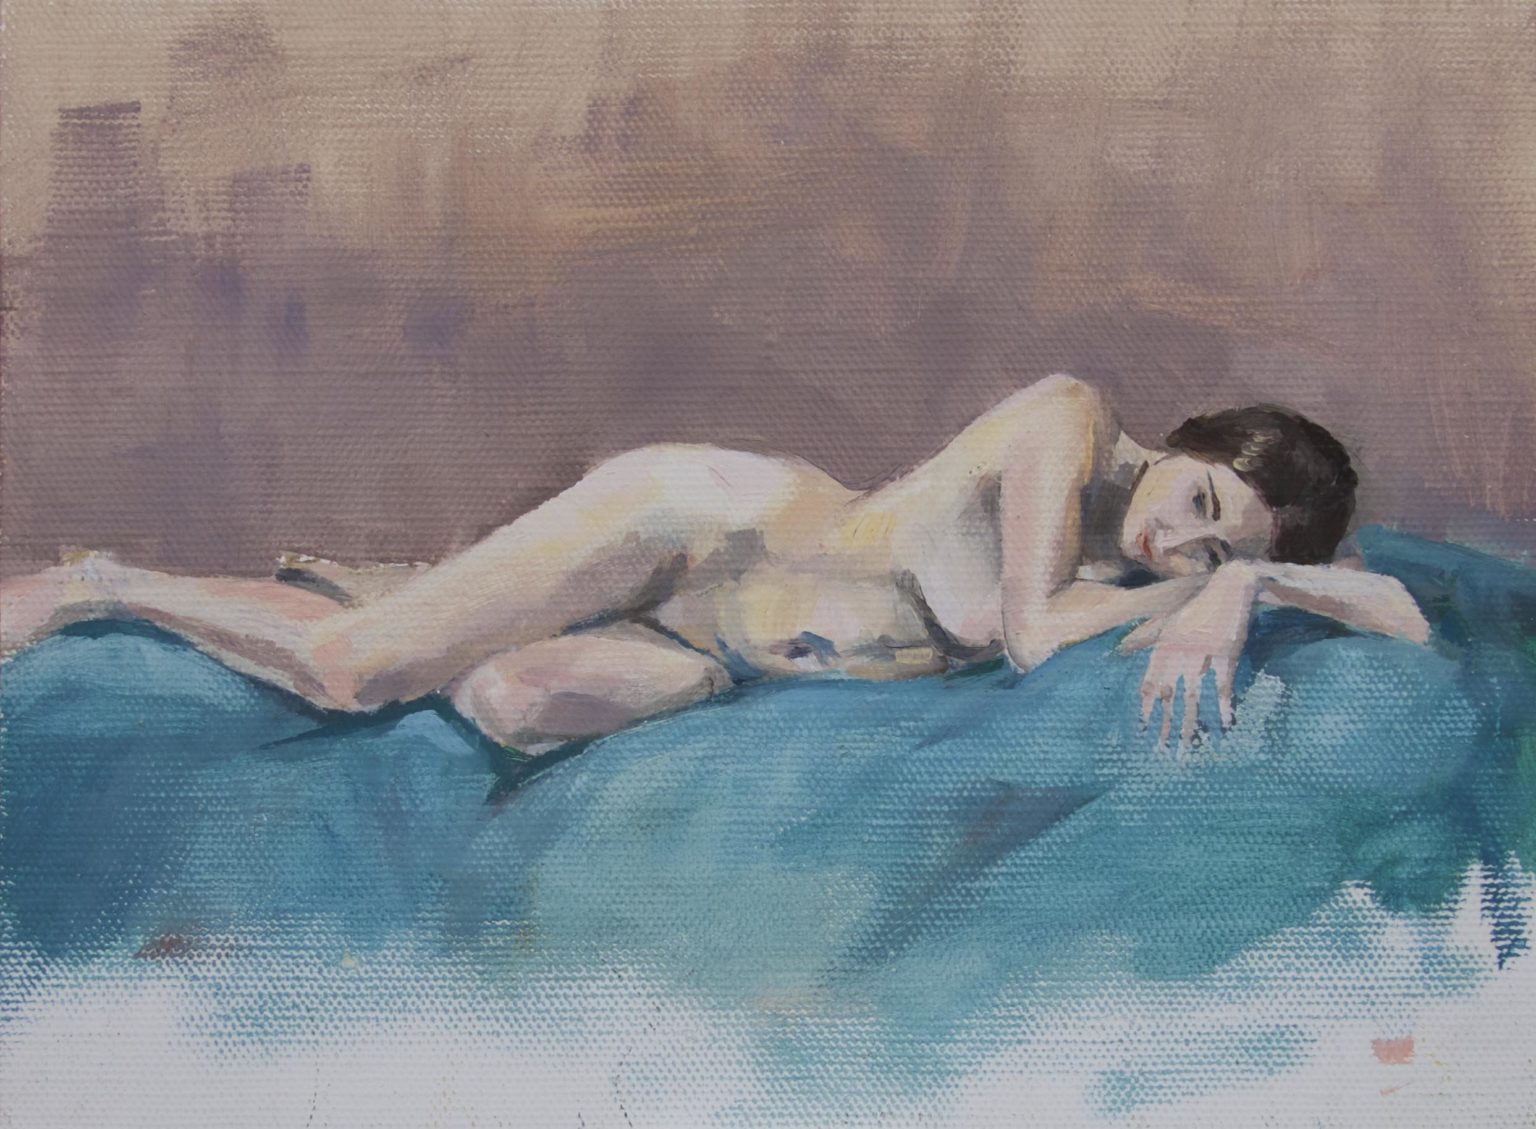 Alicia reclining | Oil on linen board, 18cm x 24cm